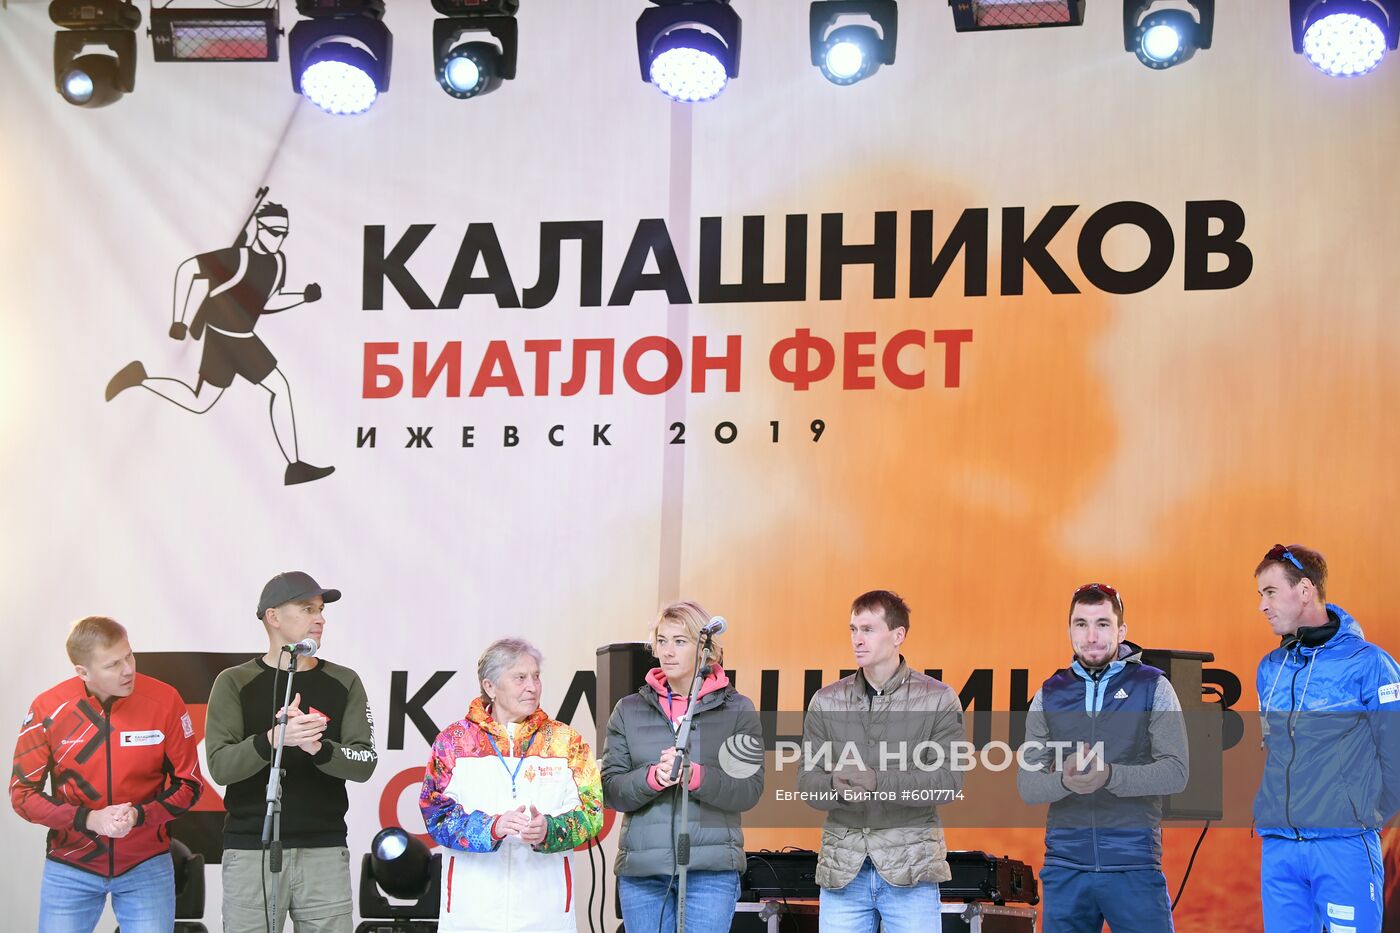 Калашников Биатлон Фест 2019